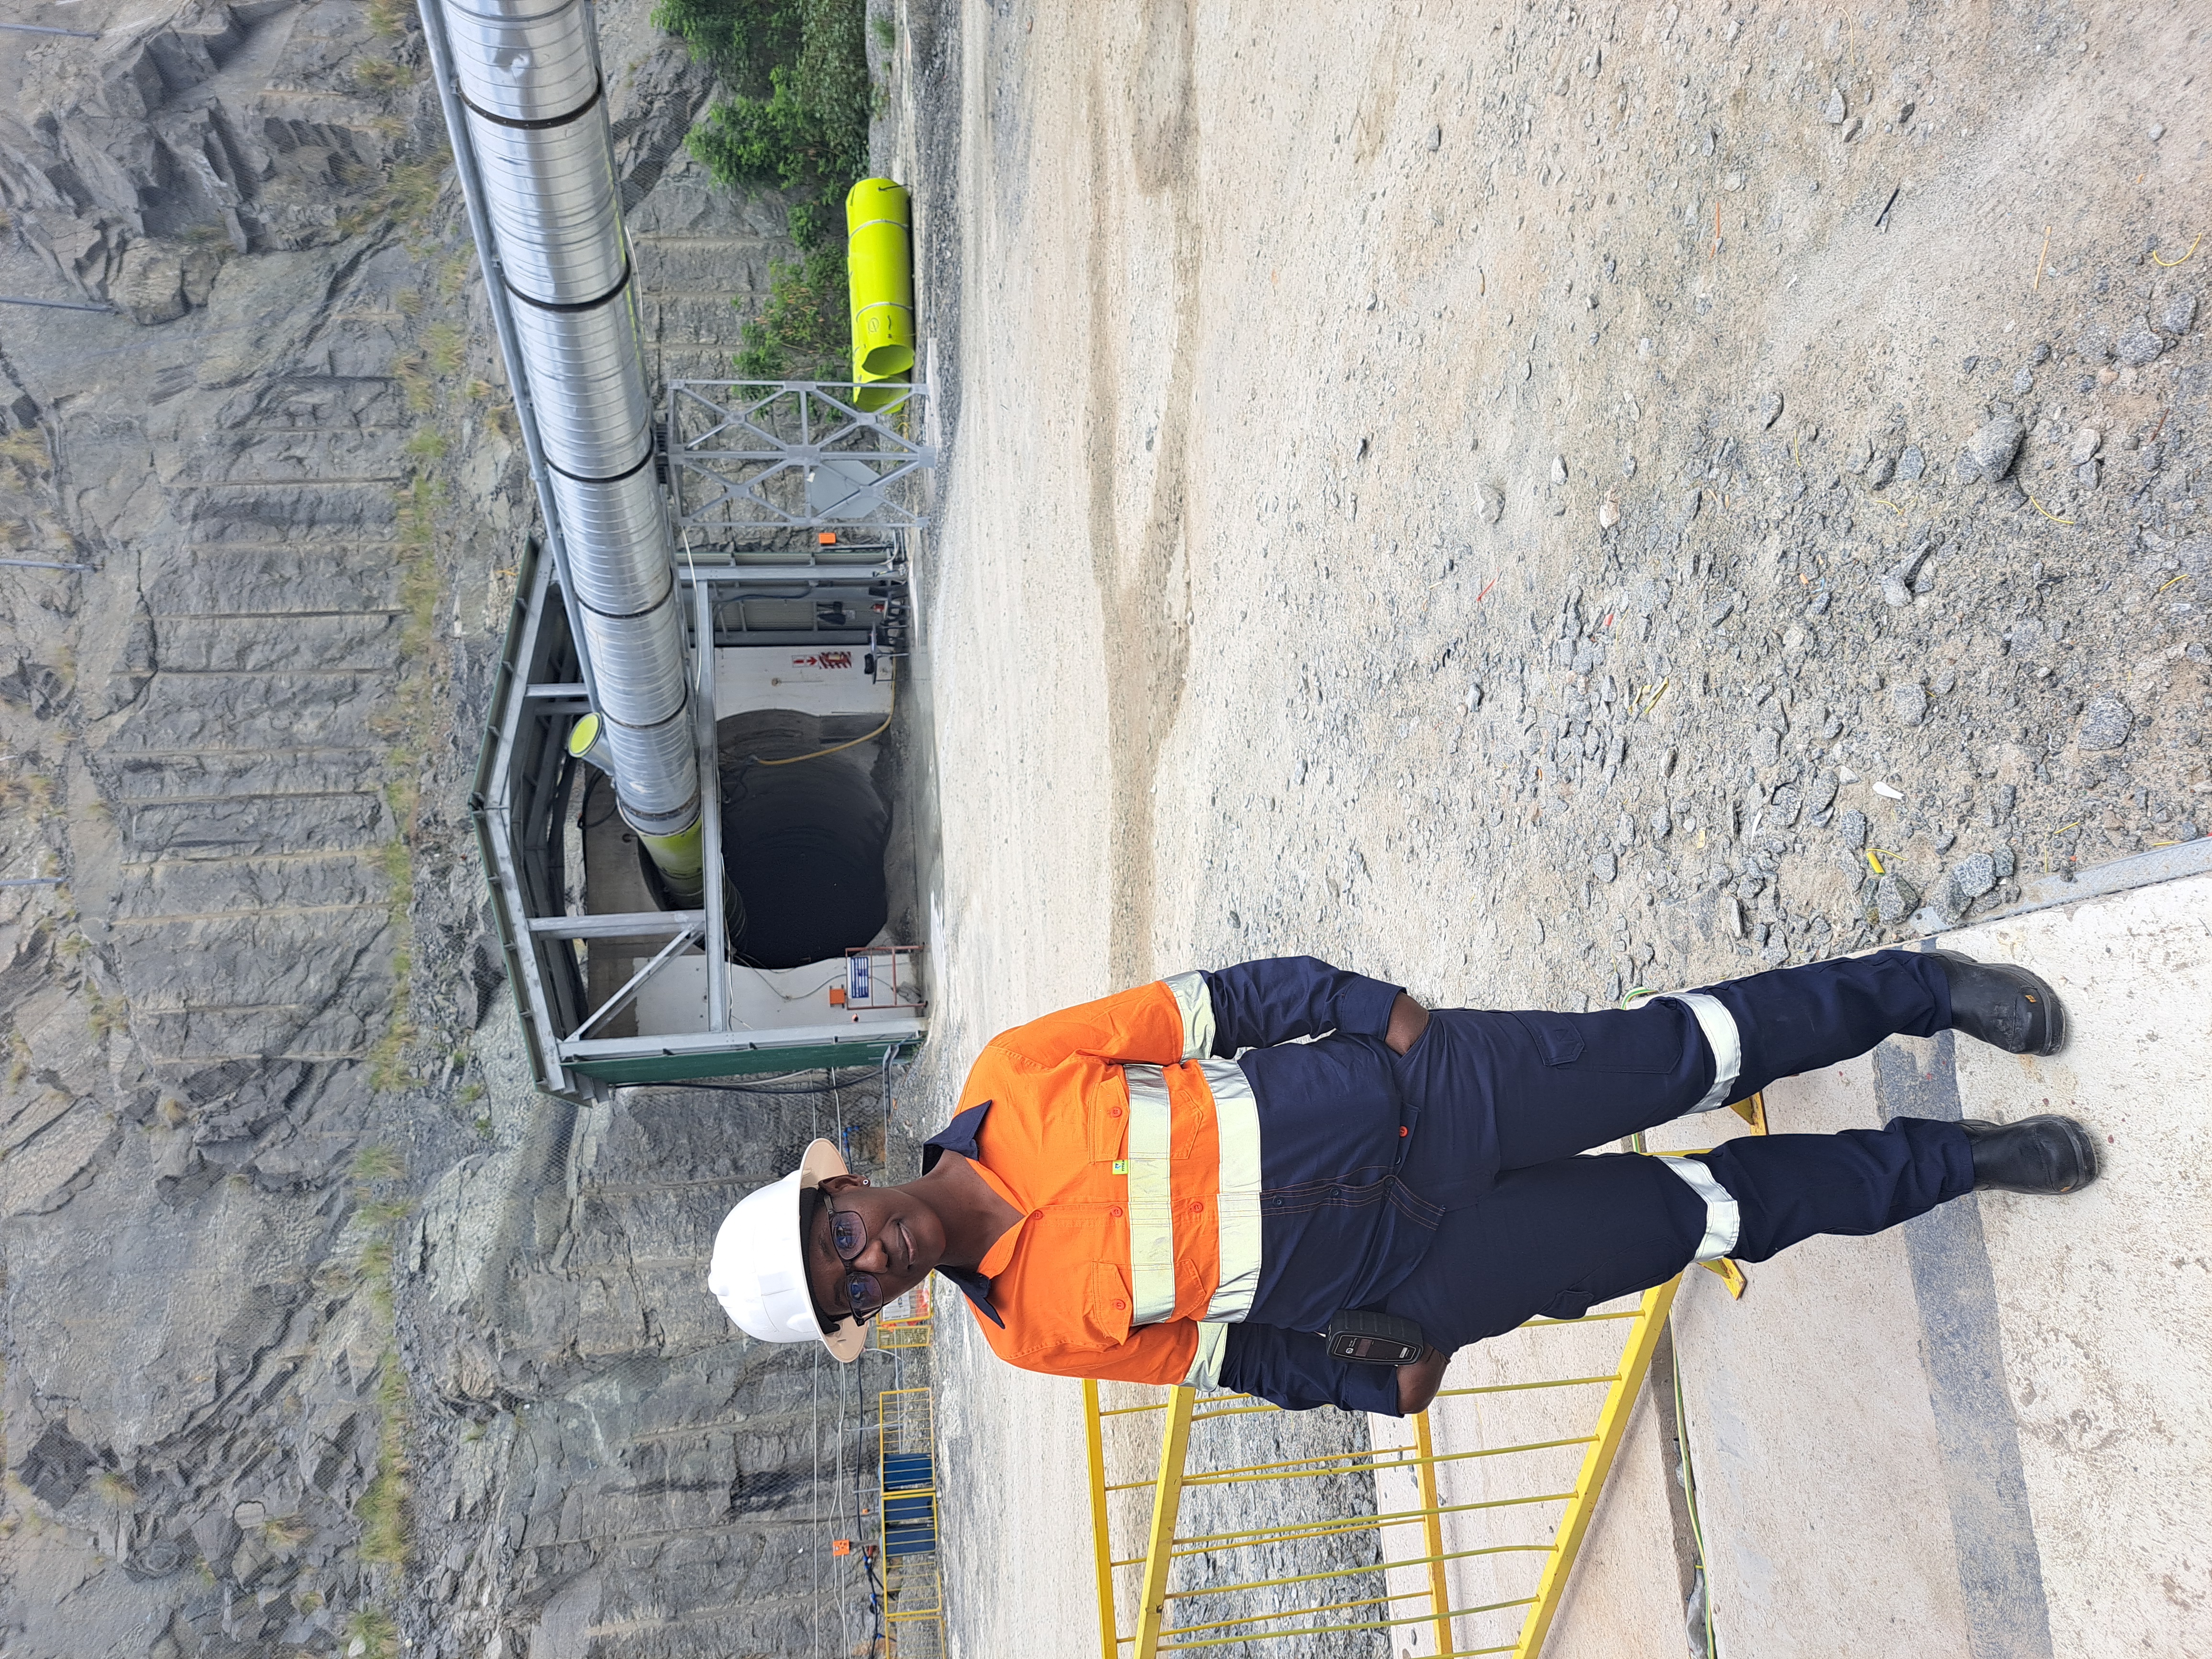 Meet Dikeledi from Redpath Mining South Africa